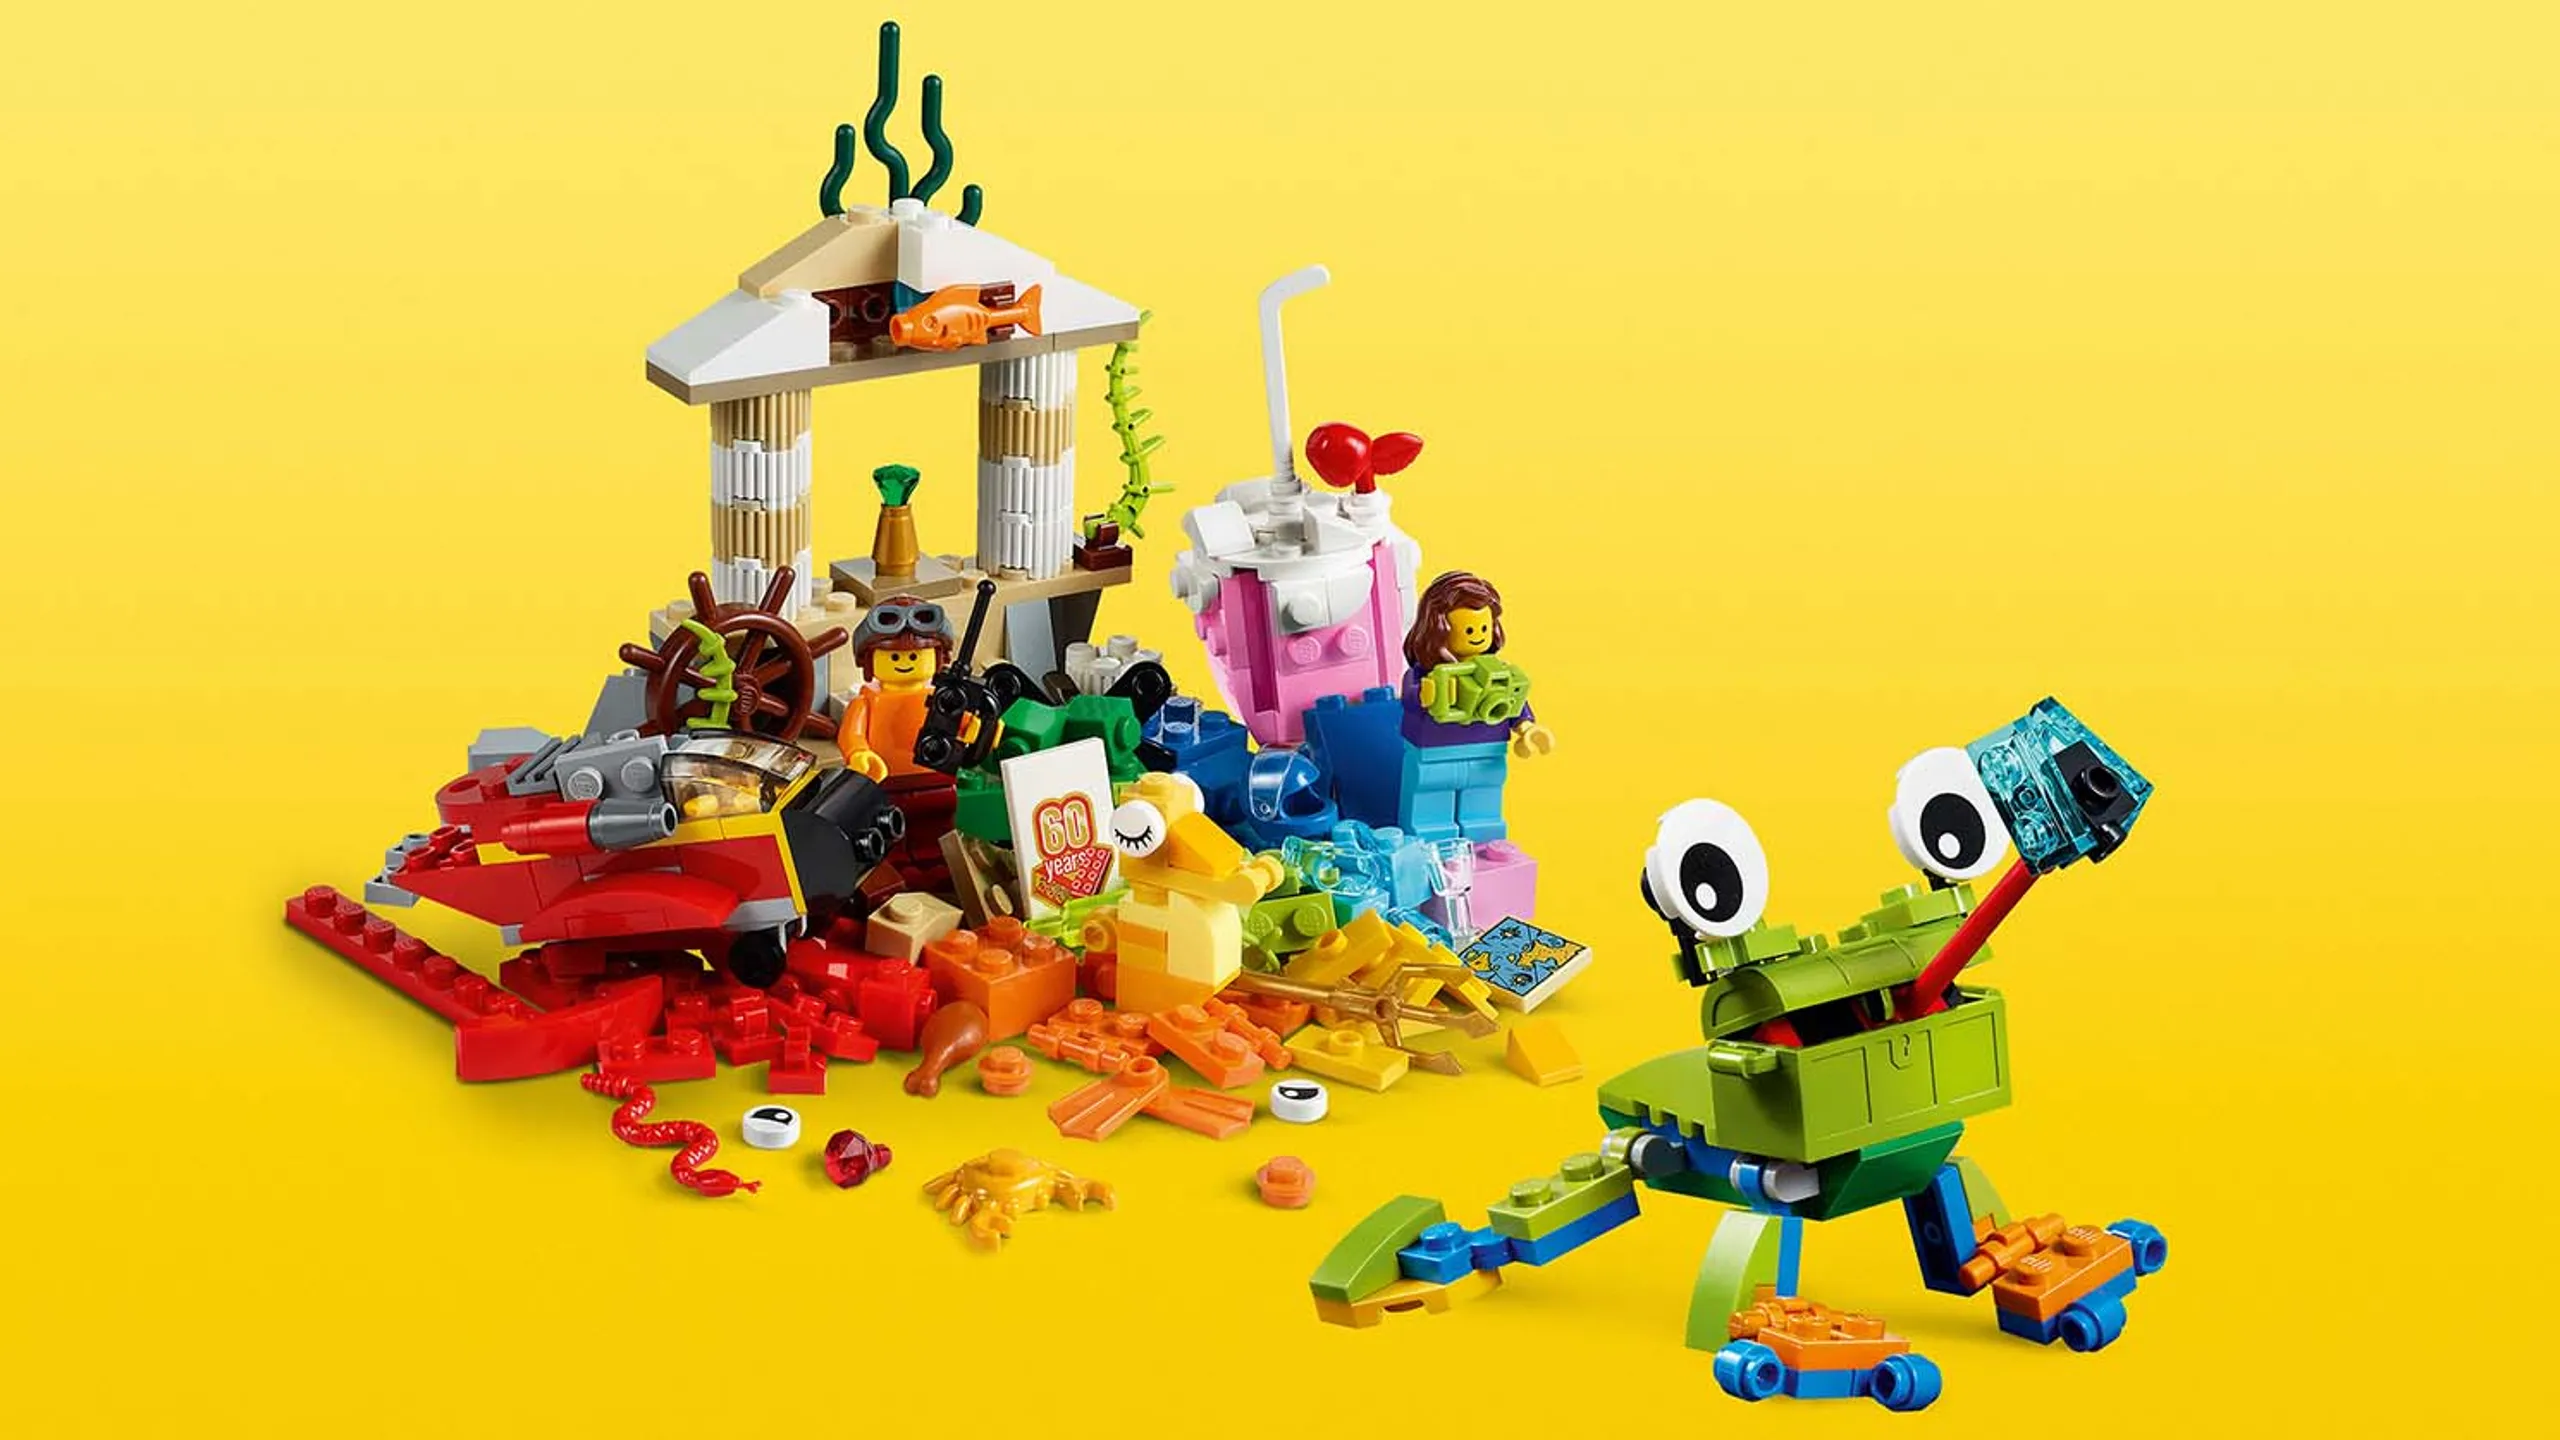 LEGO Classic World Fun - 10403 - Happy green frog, milkshake and minifigures in a pile of bricks